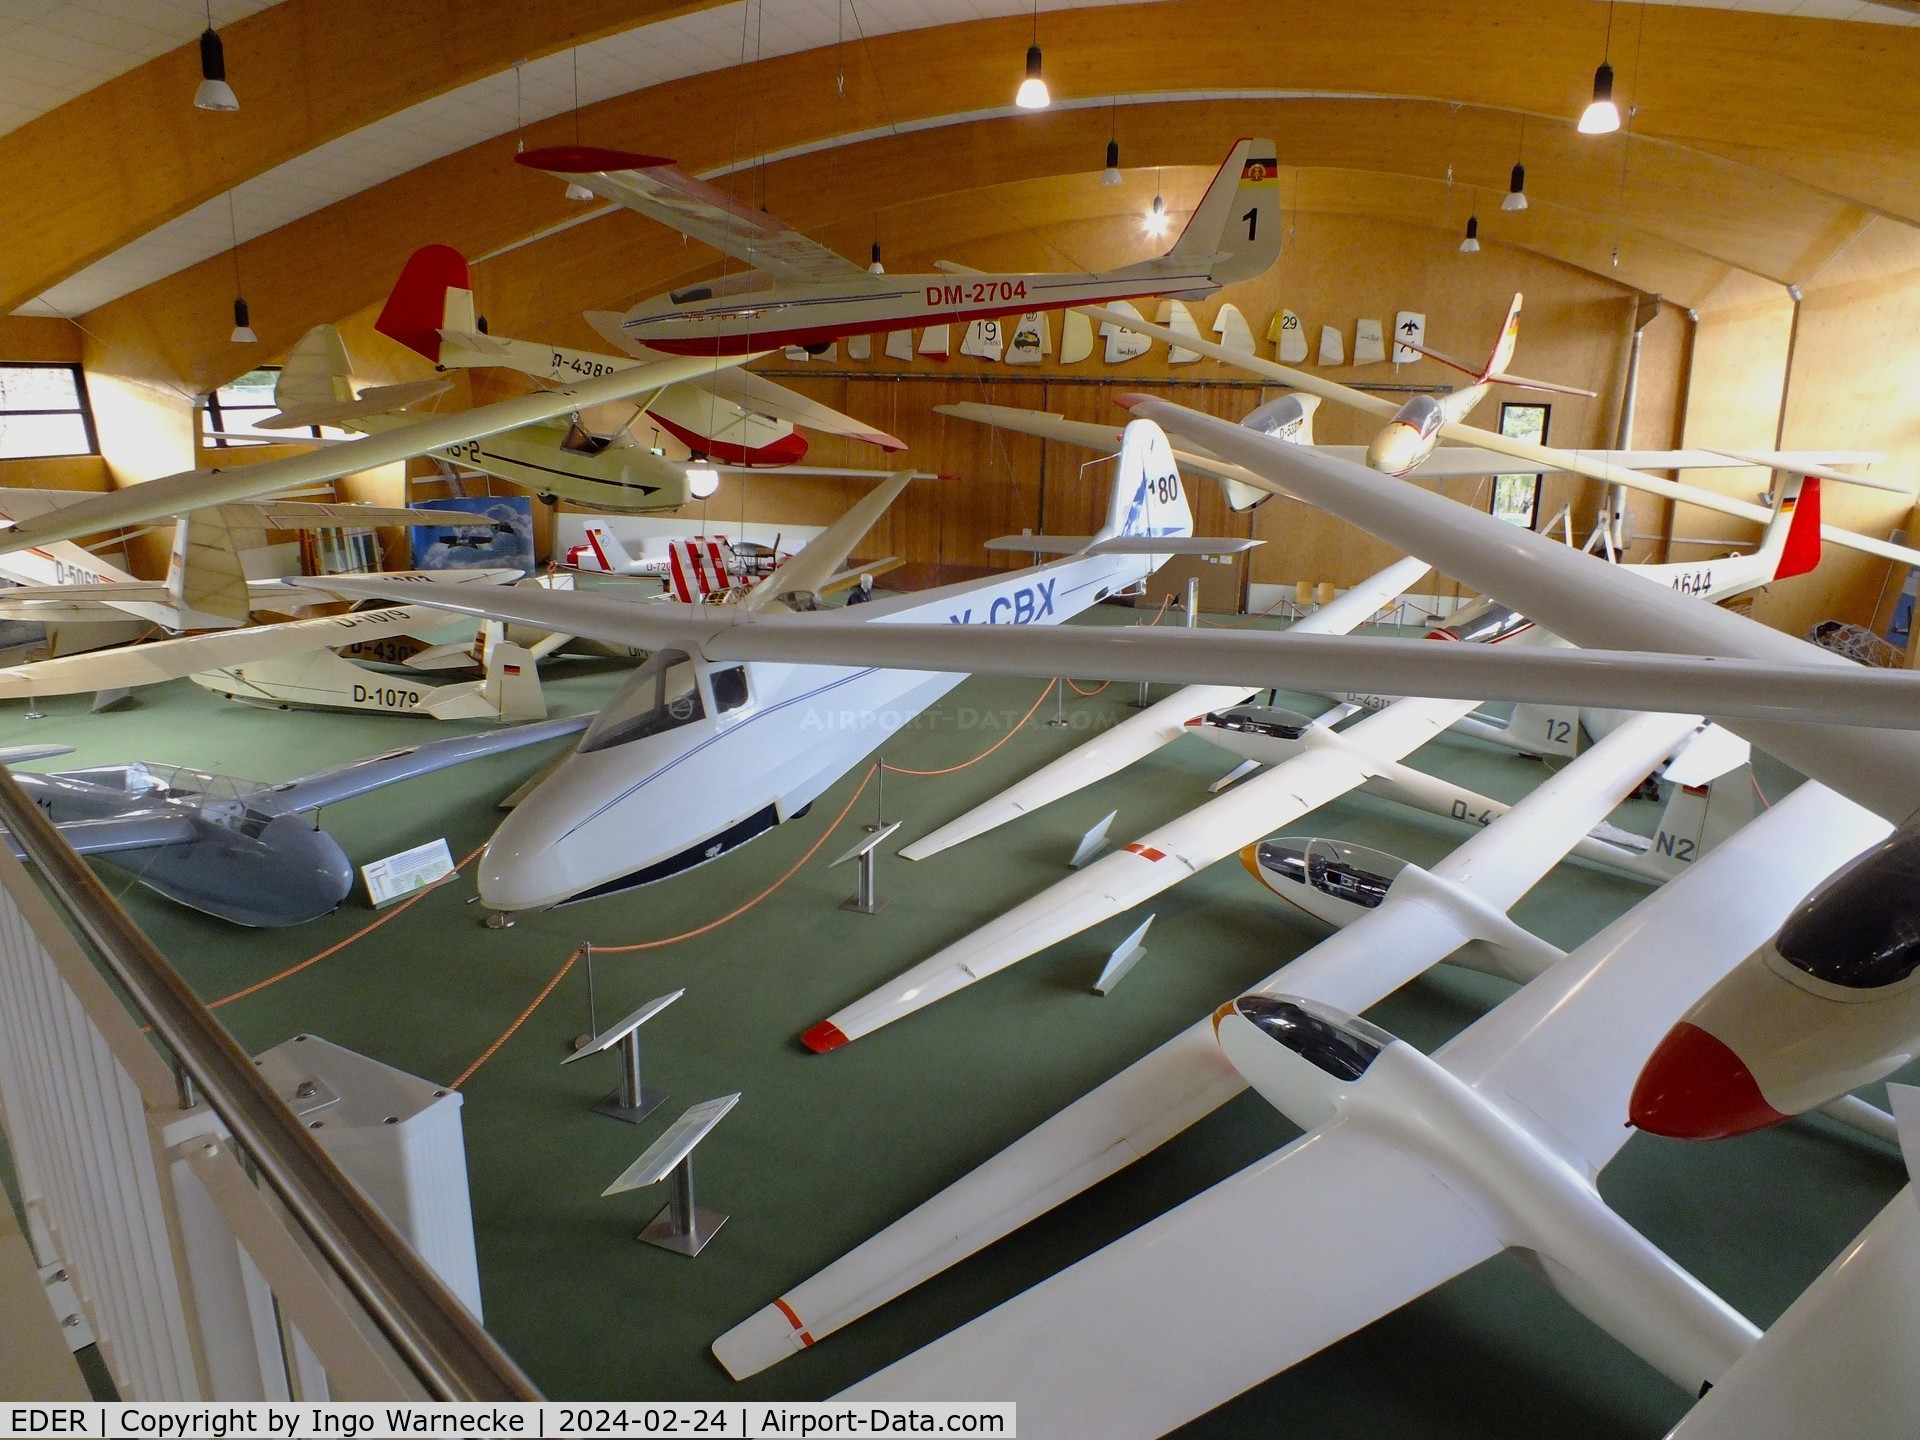 EDER Airport - inside the big hangar of the Deutsches Segelflugmuseum mit Modellflug (German Soaring Museum with Model Flight) at Gersfeld - Wasserkuppe airfield